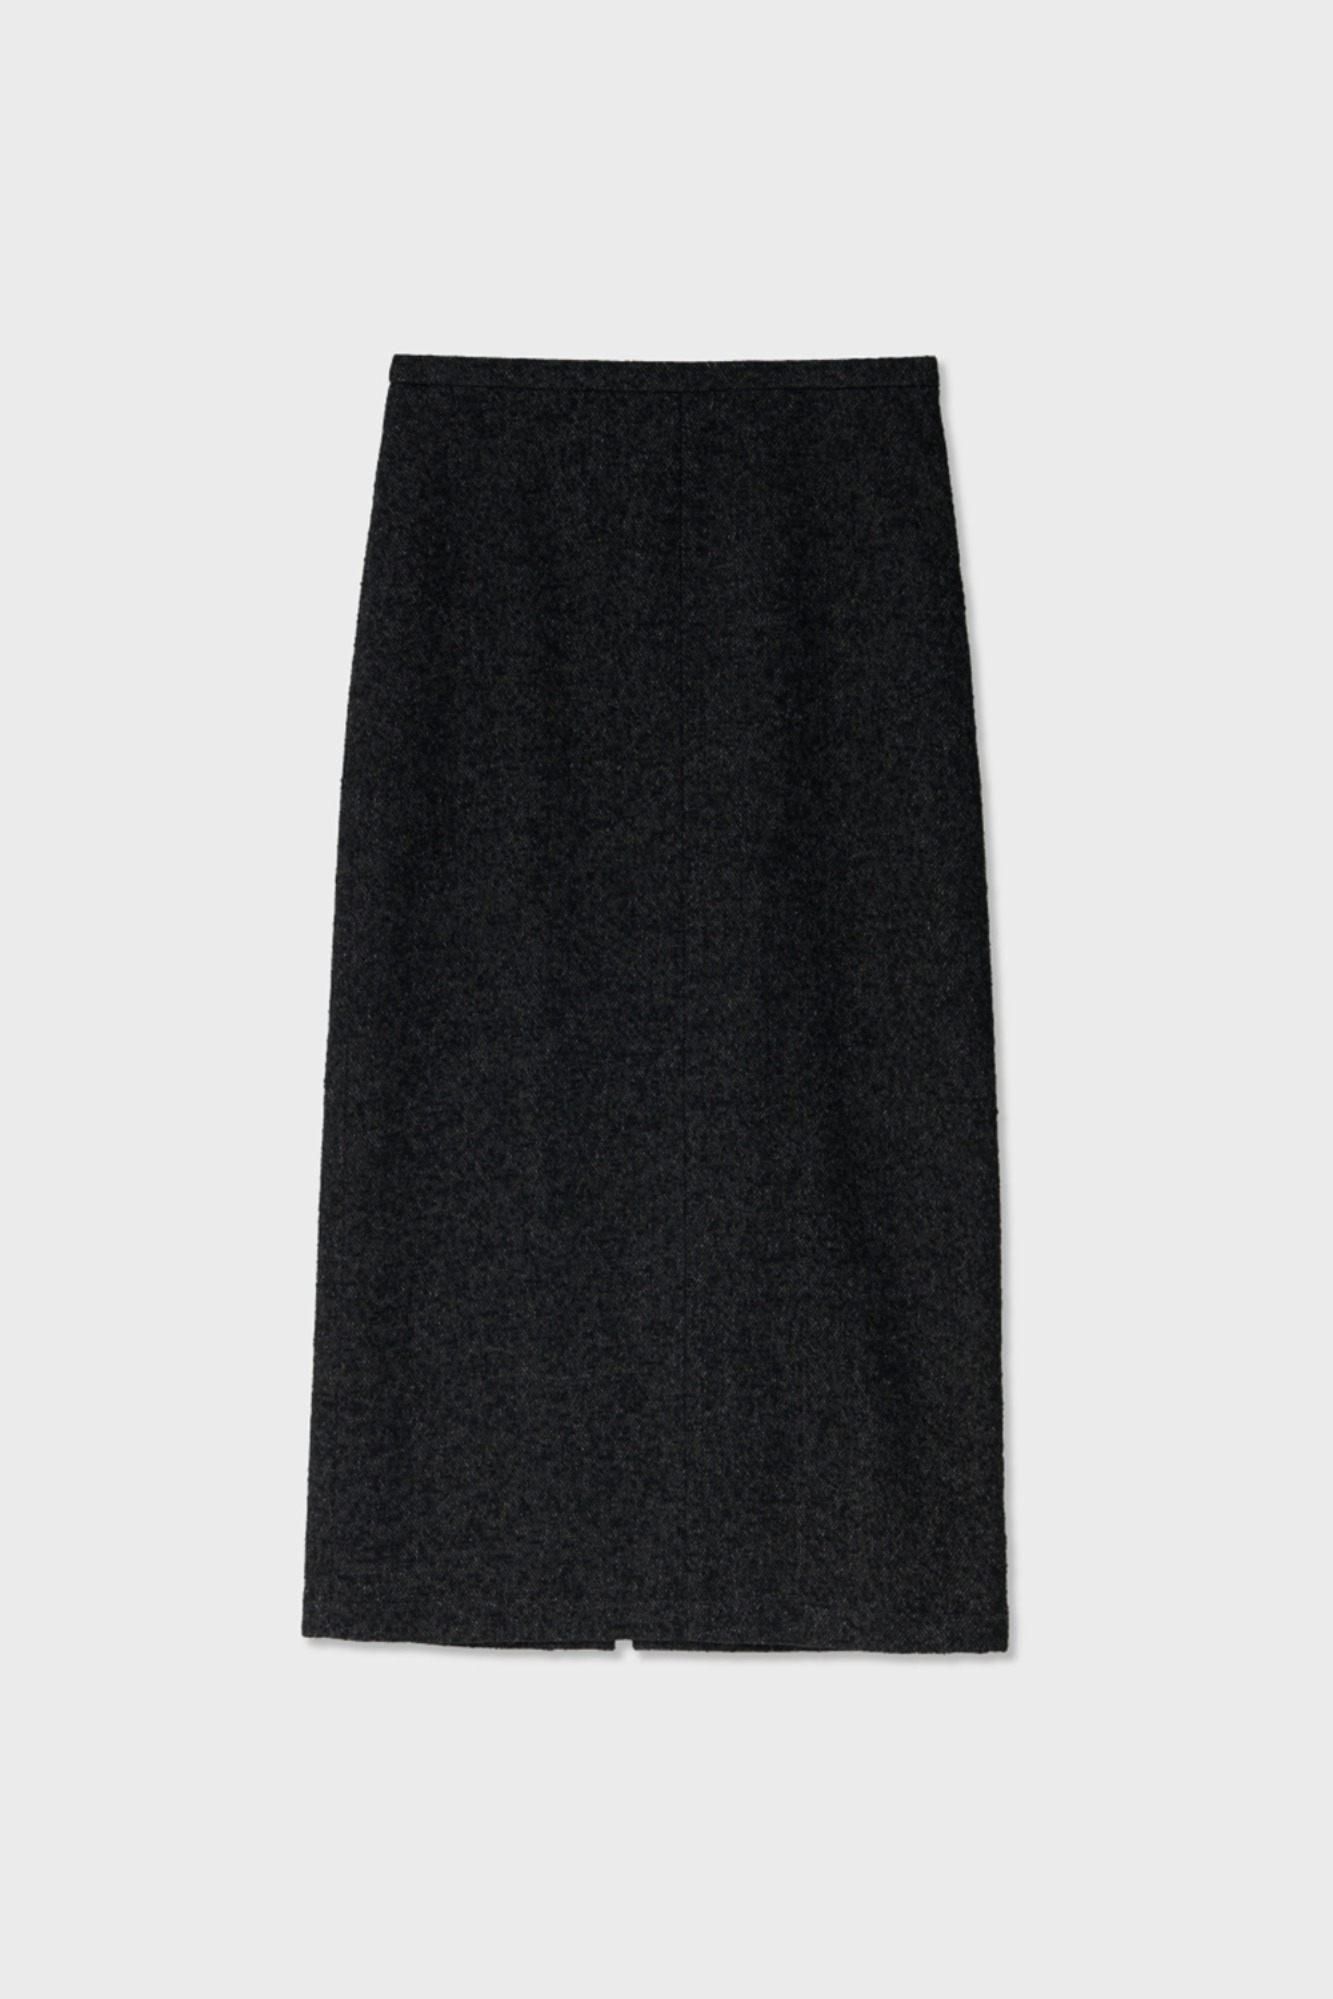 Lun Herringbone Skirt